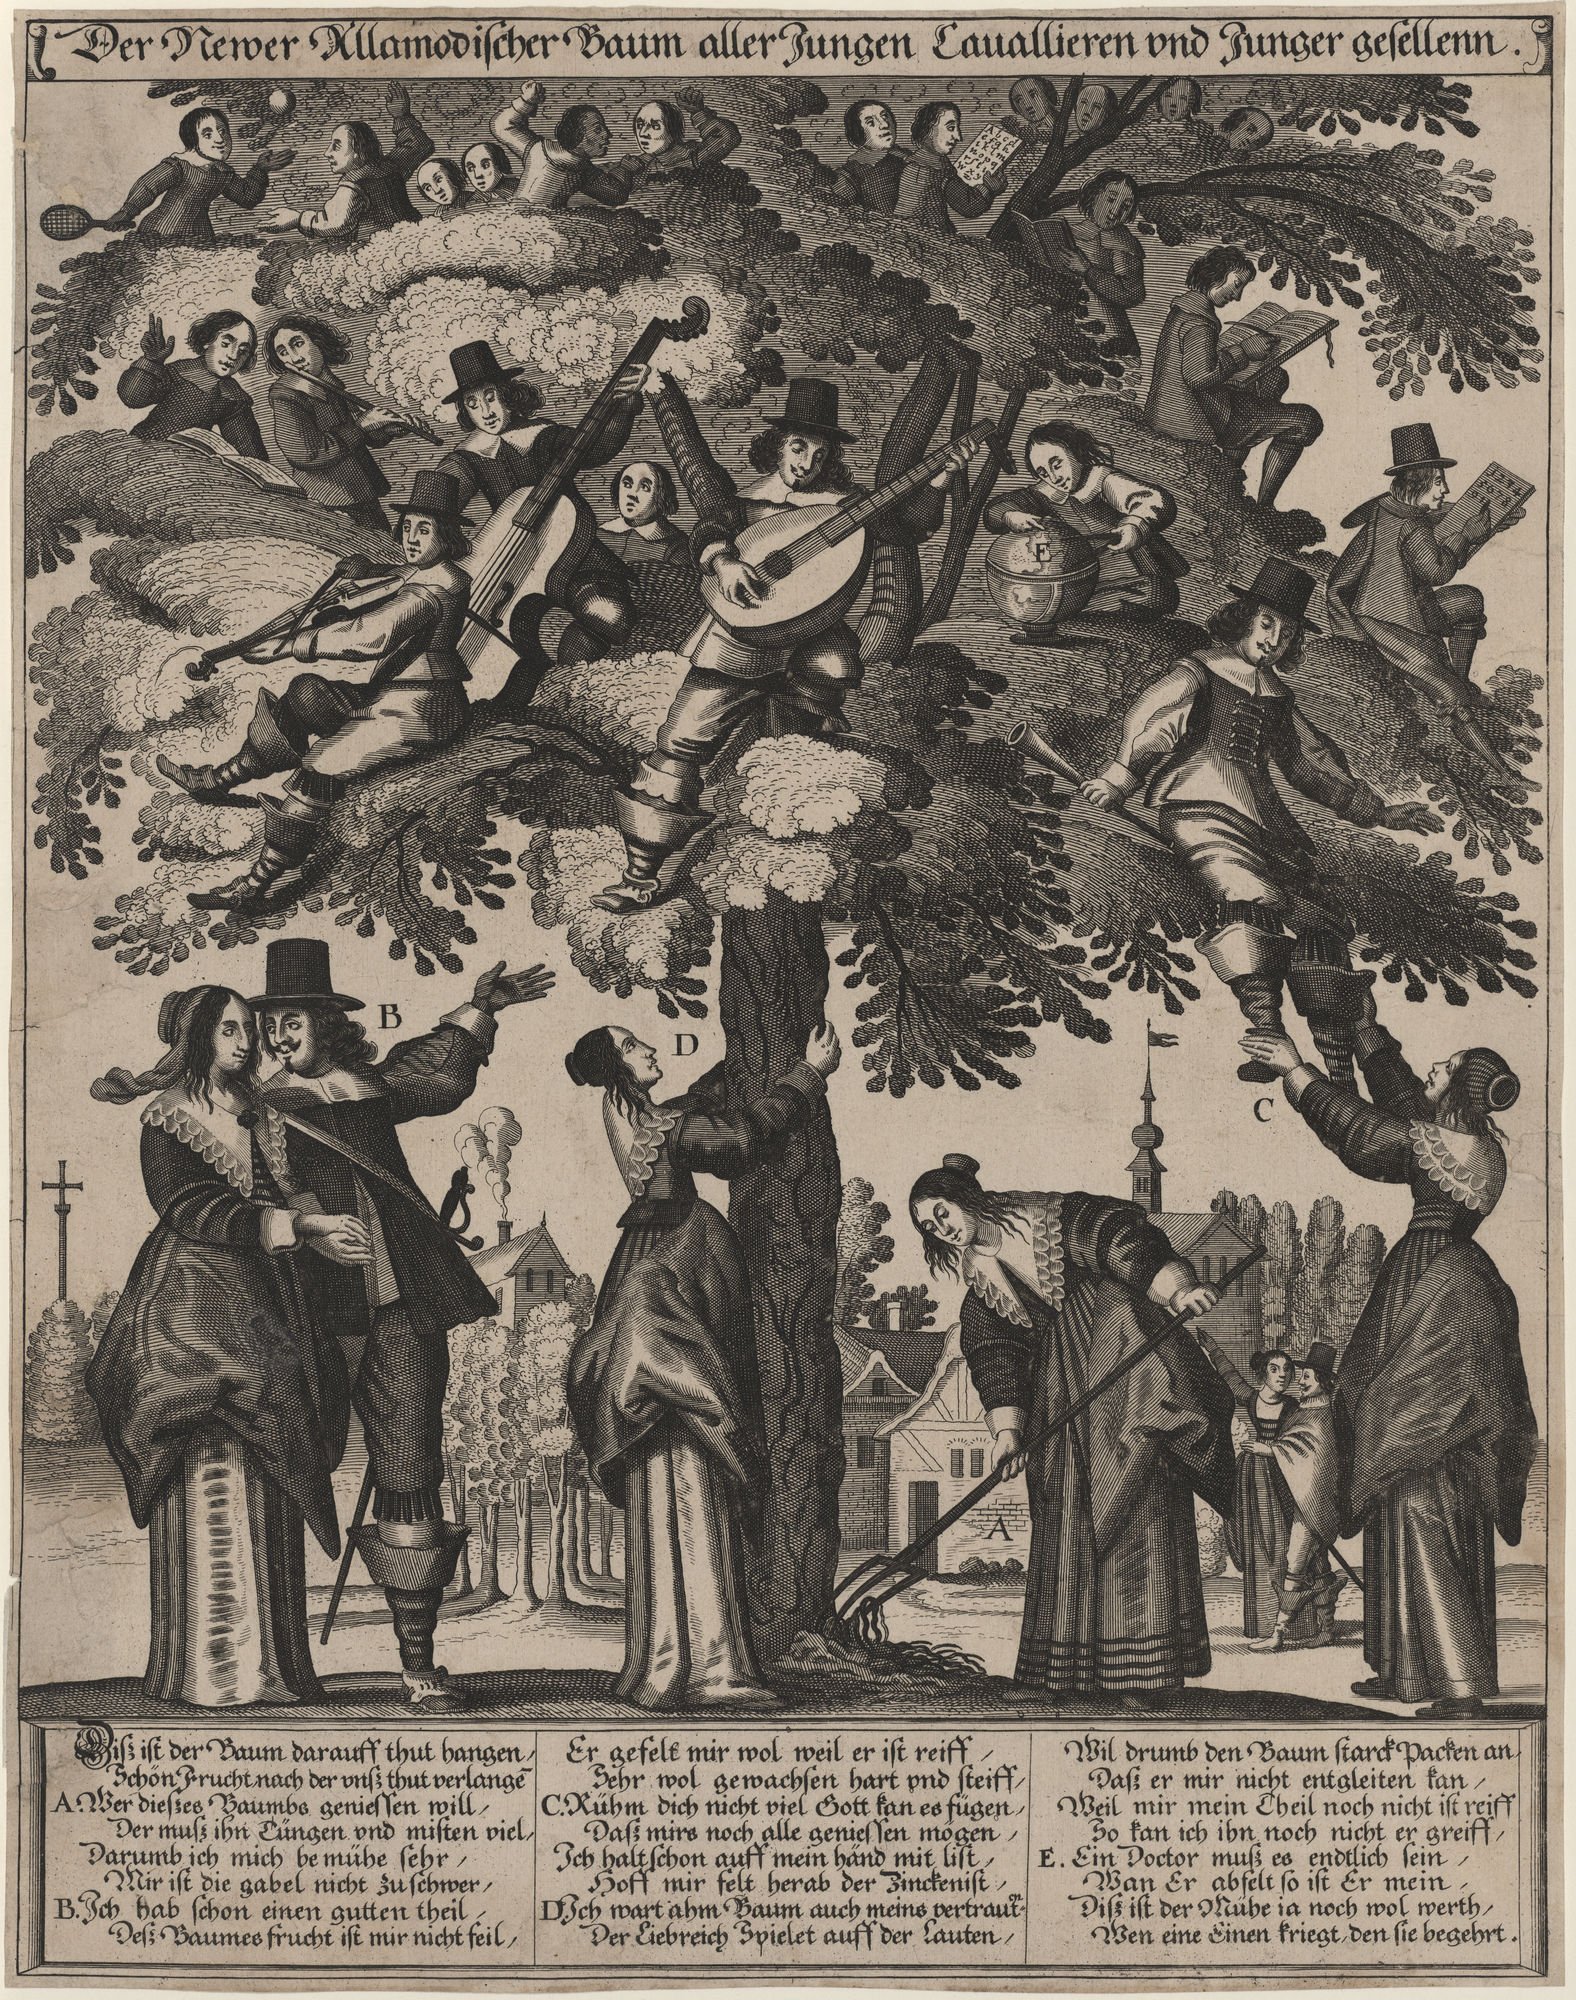 Der Newer Allamodischer Baum aller Jungen Cauallieren und Junger gesellenn. (Kulturstiftung Sachsen-Anhalt Public Domain Mark)